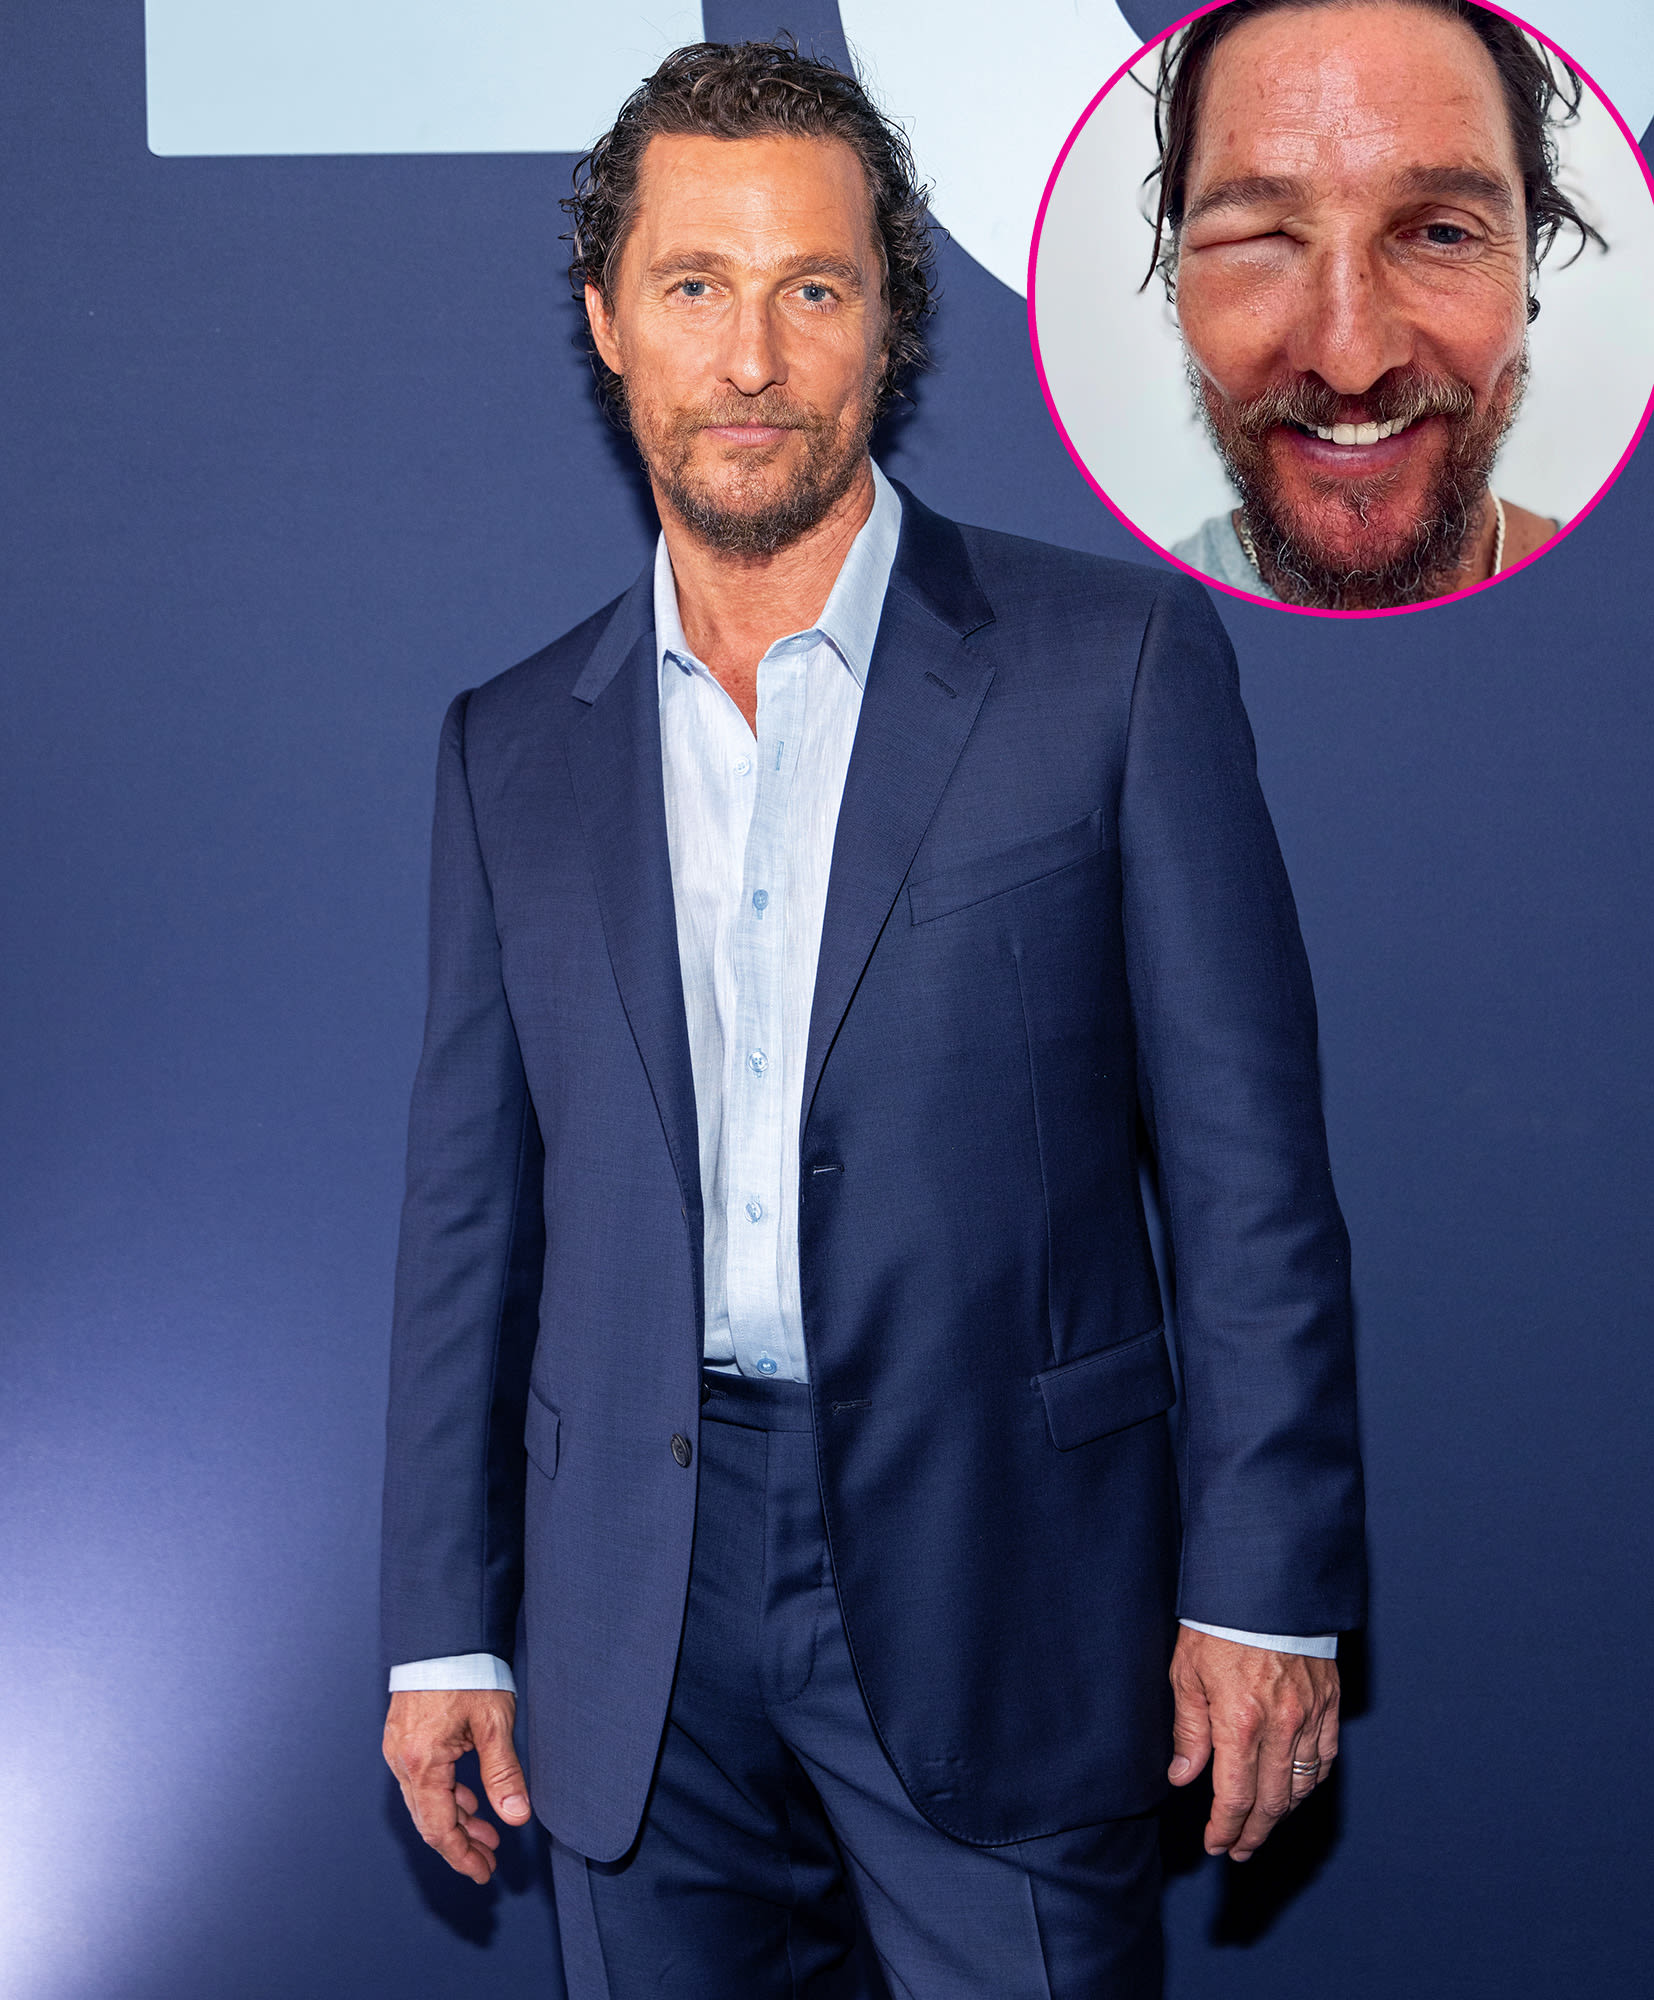 Matthew McConaughey’s Eye Is Swollen Shut After Bee Sting: ‘Bee Swell’